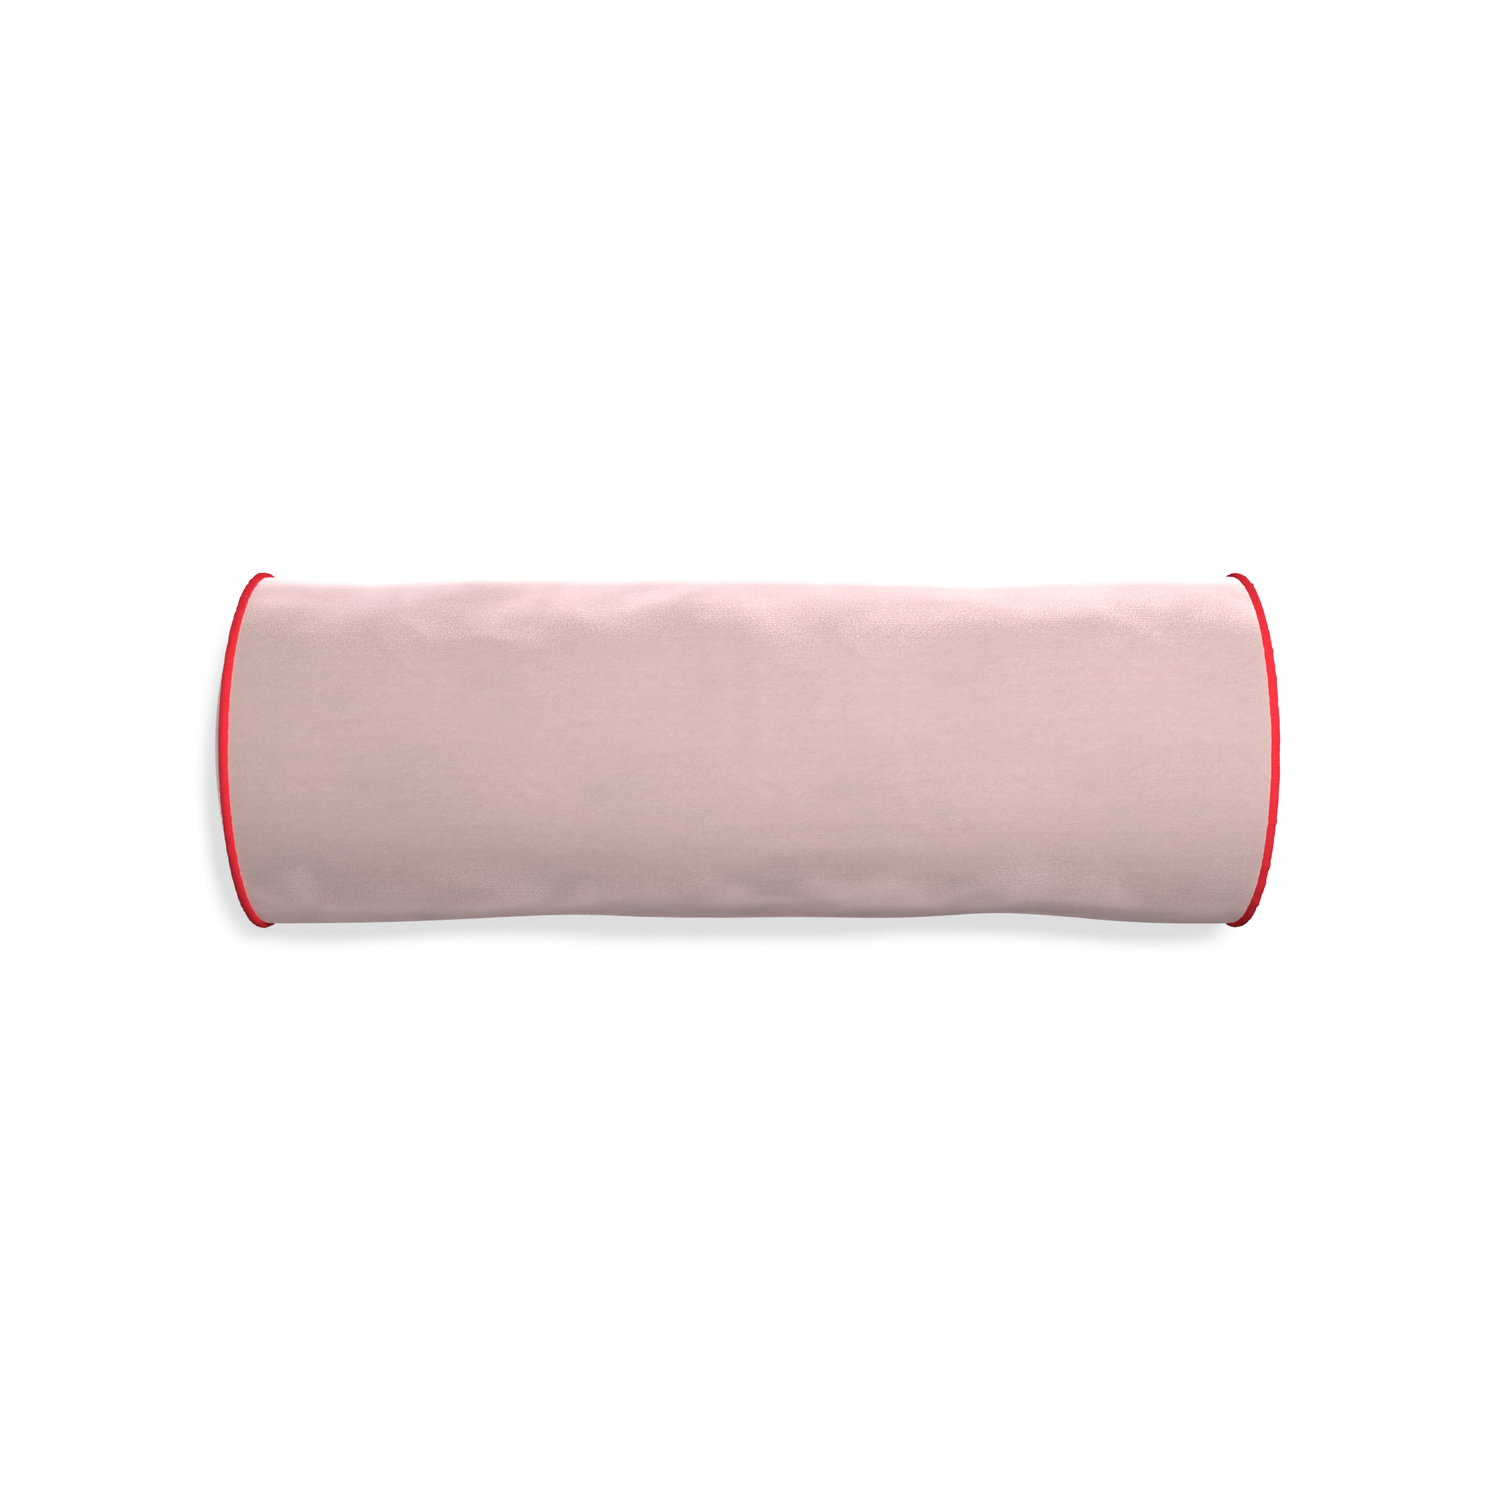 bolster light pink velvet pillow with red piping